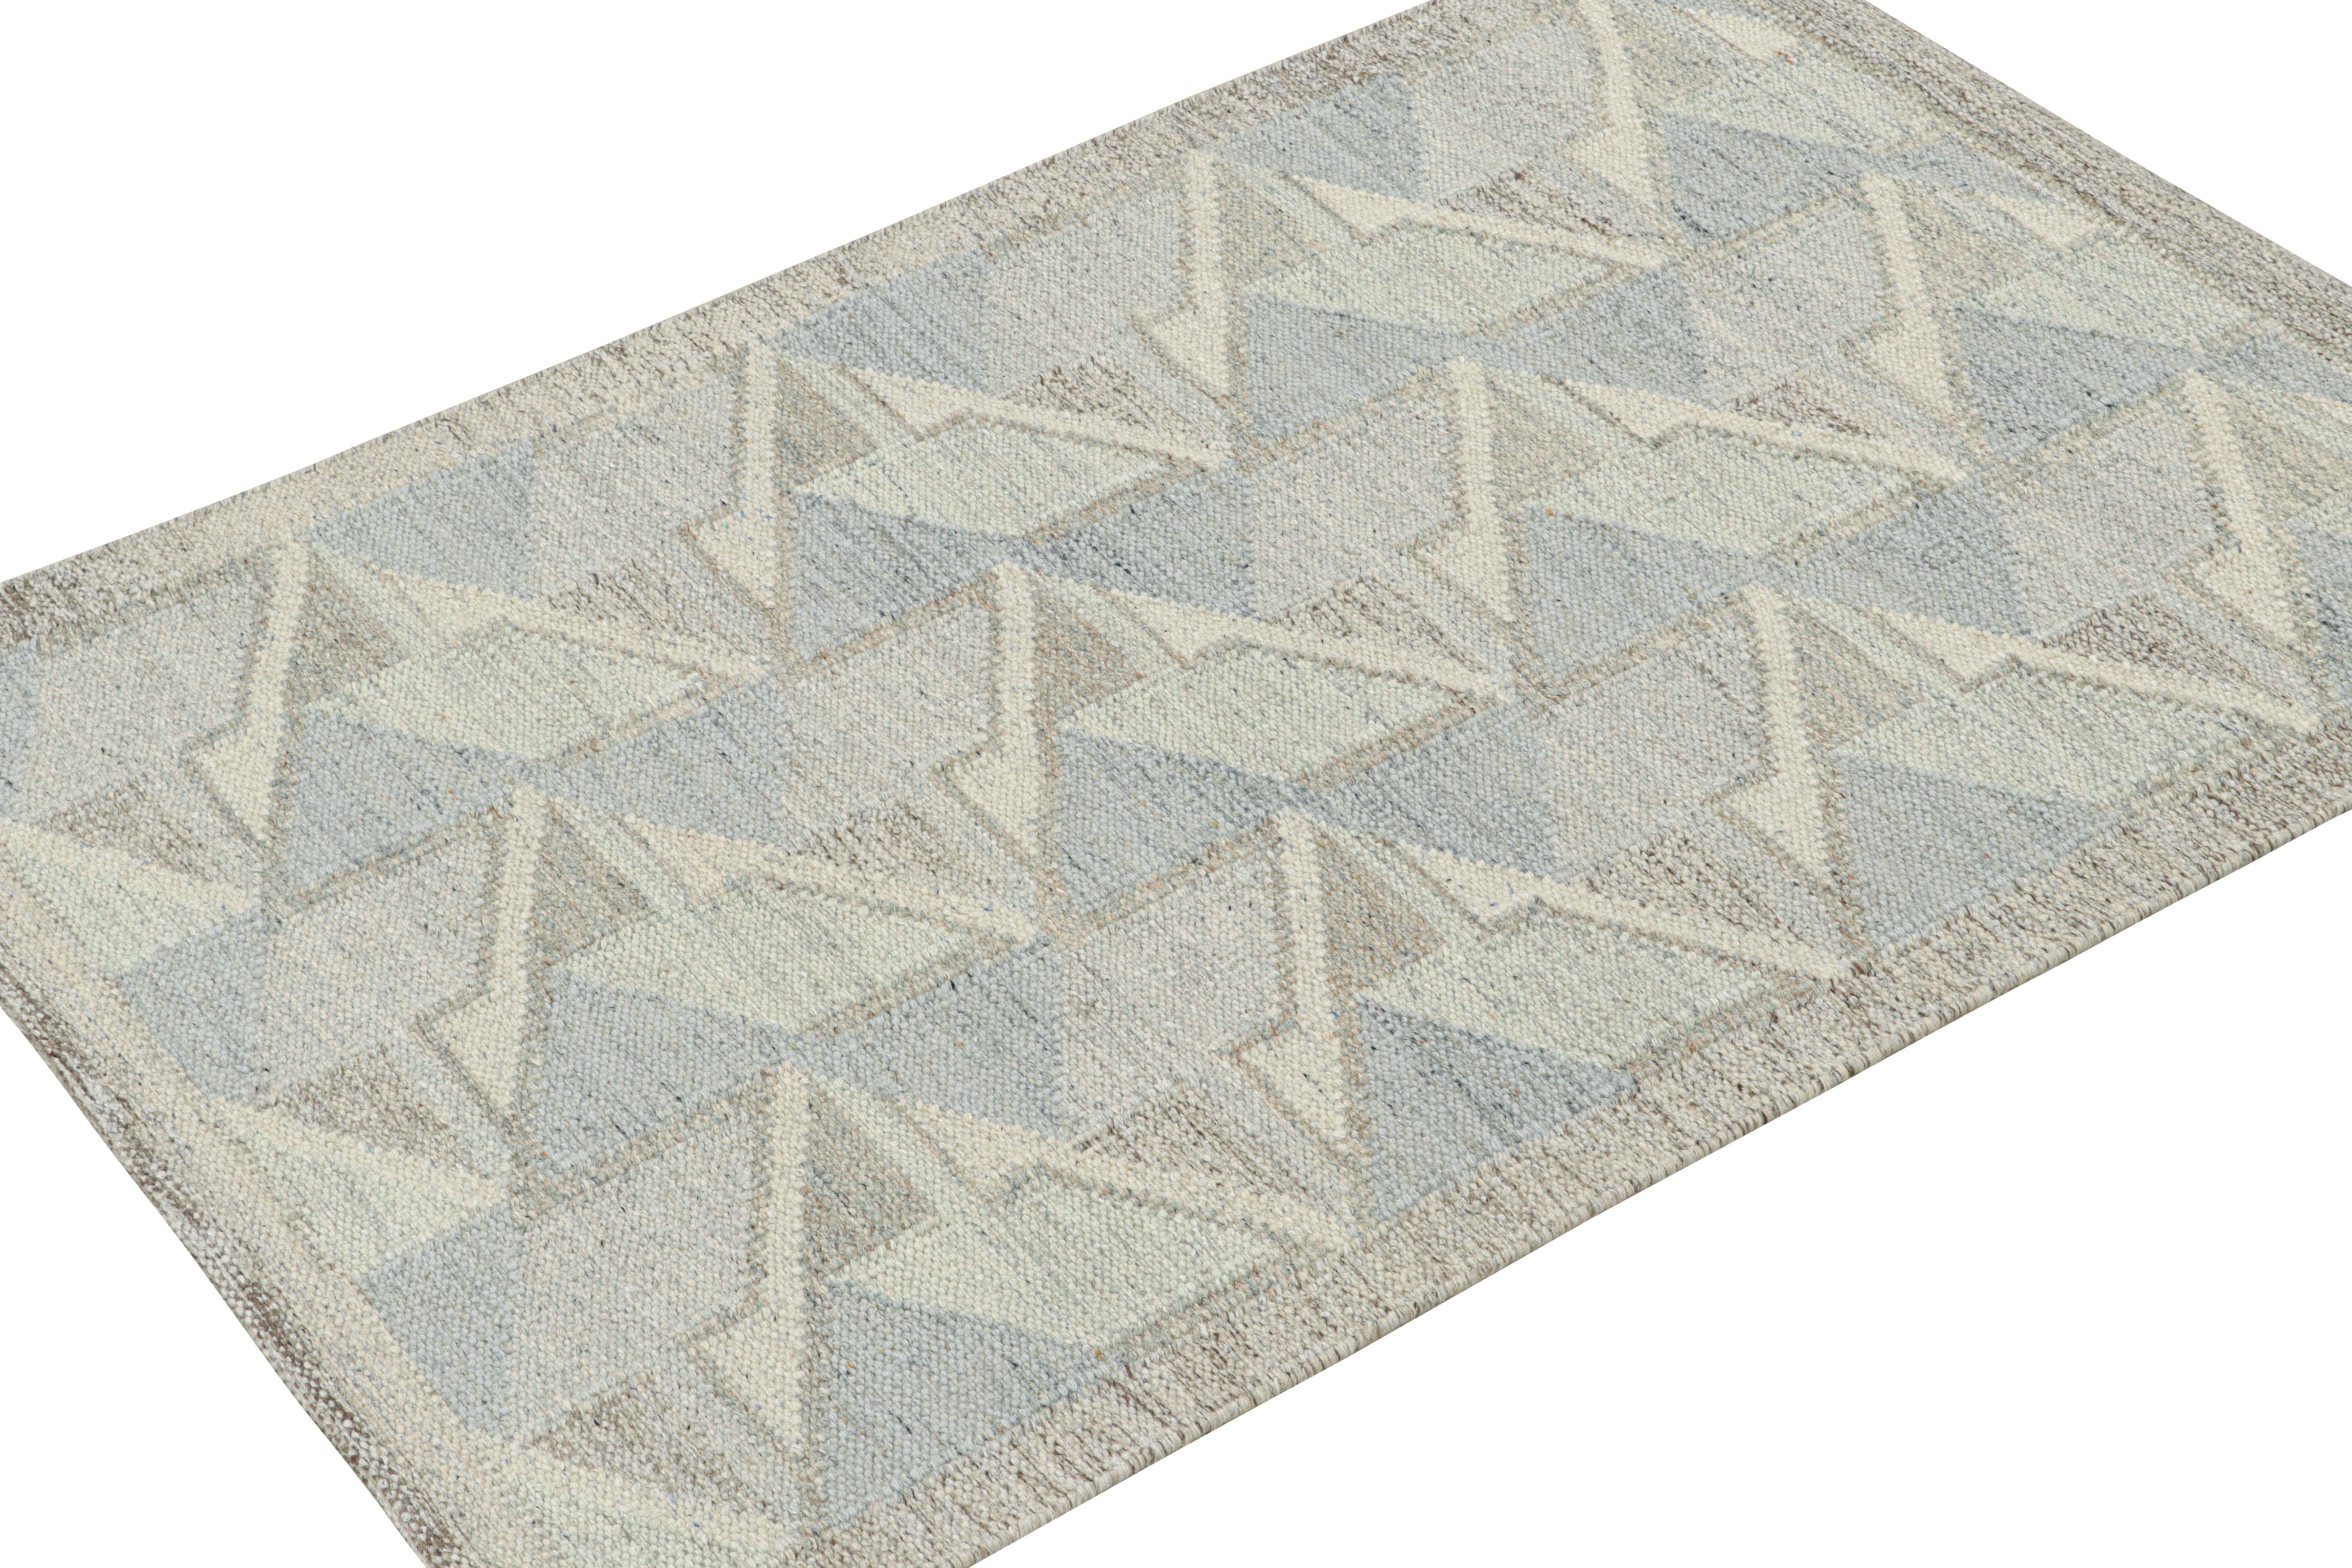 Modern Rug & Kilim’s Scandinavian Style Kilim in Gray, White, & Blue Geometric Patterns For Sale